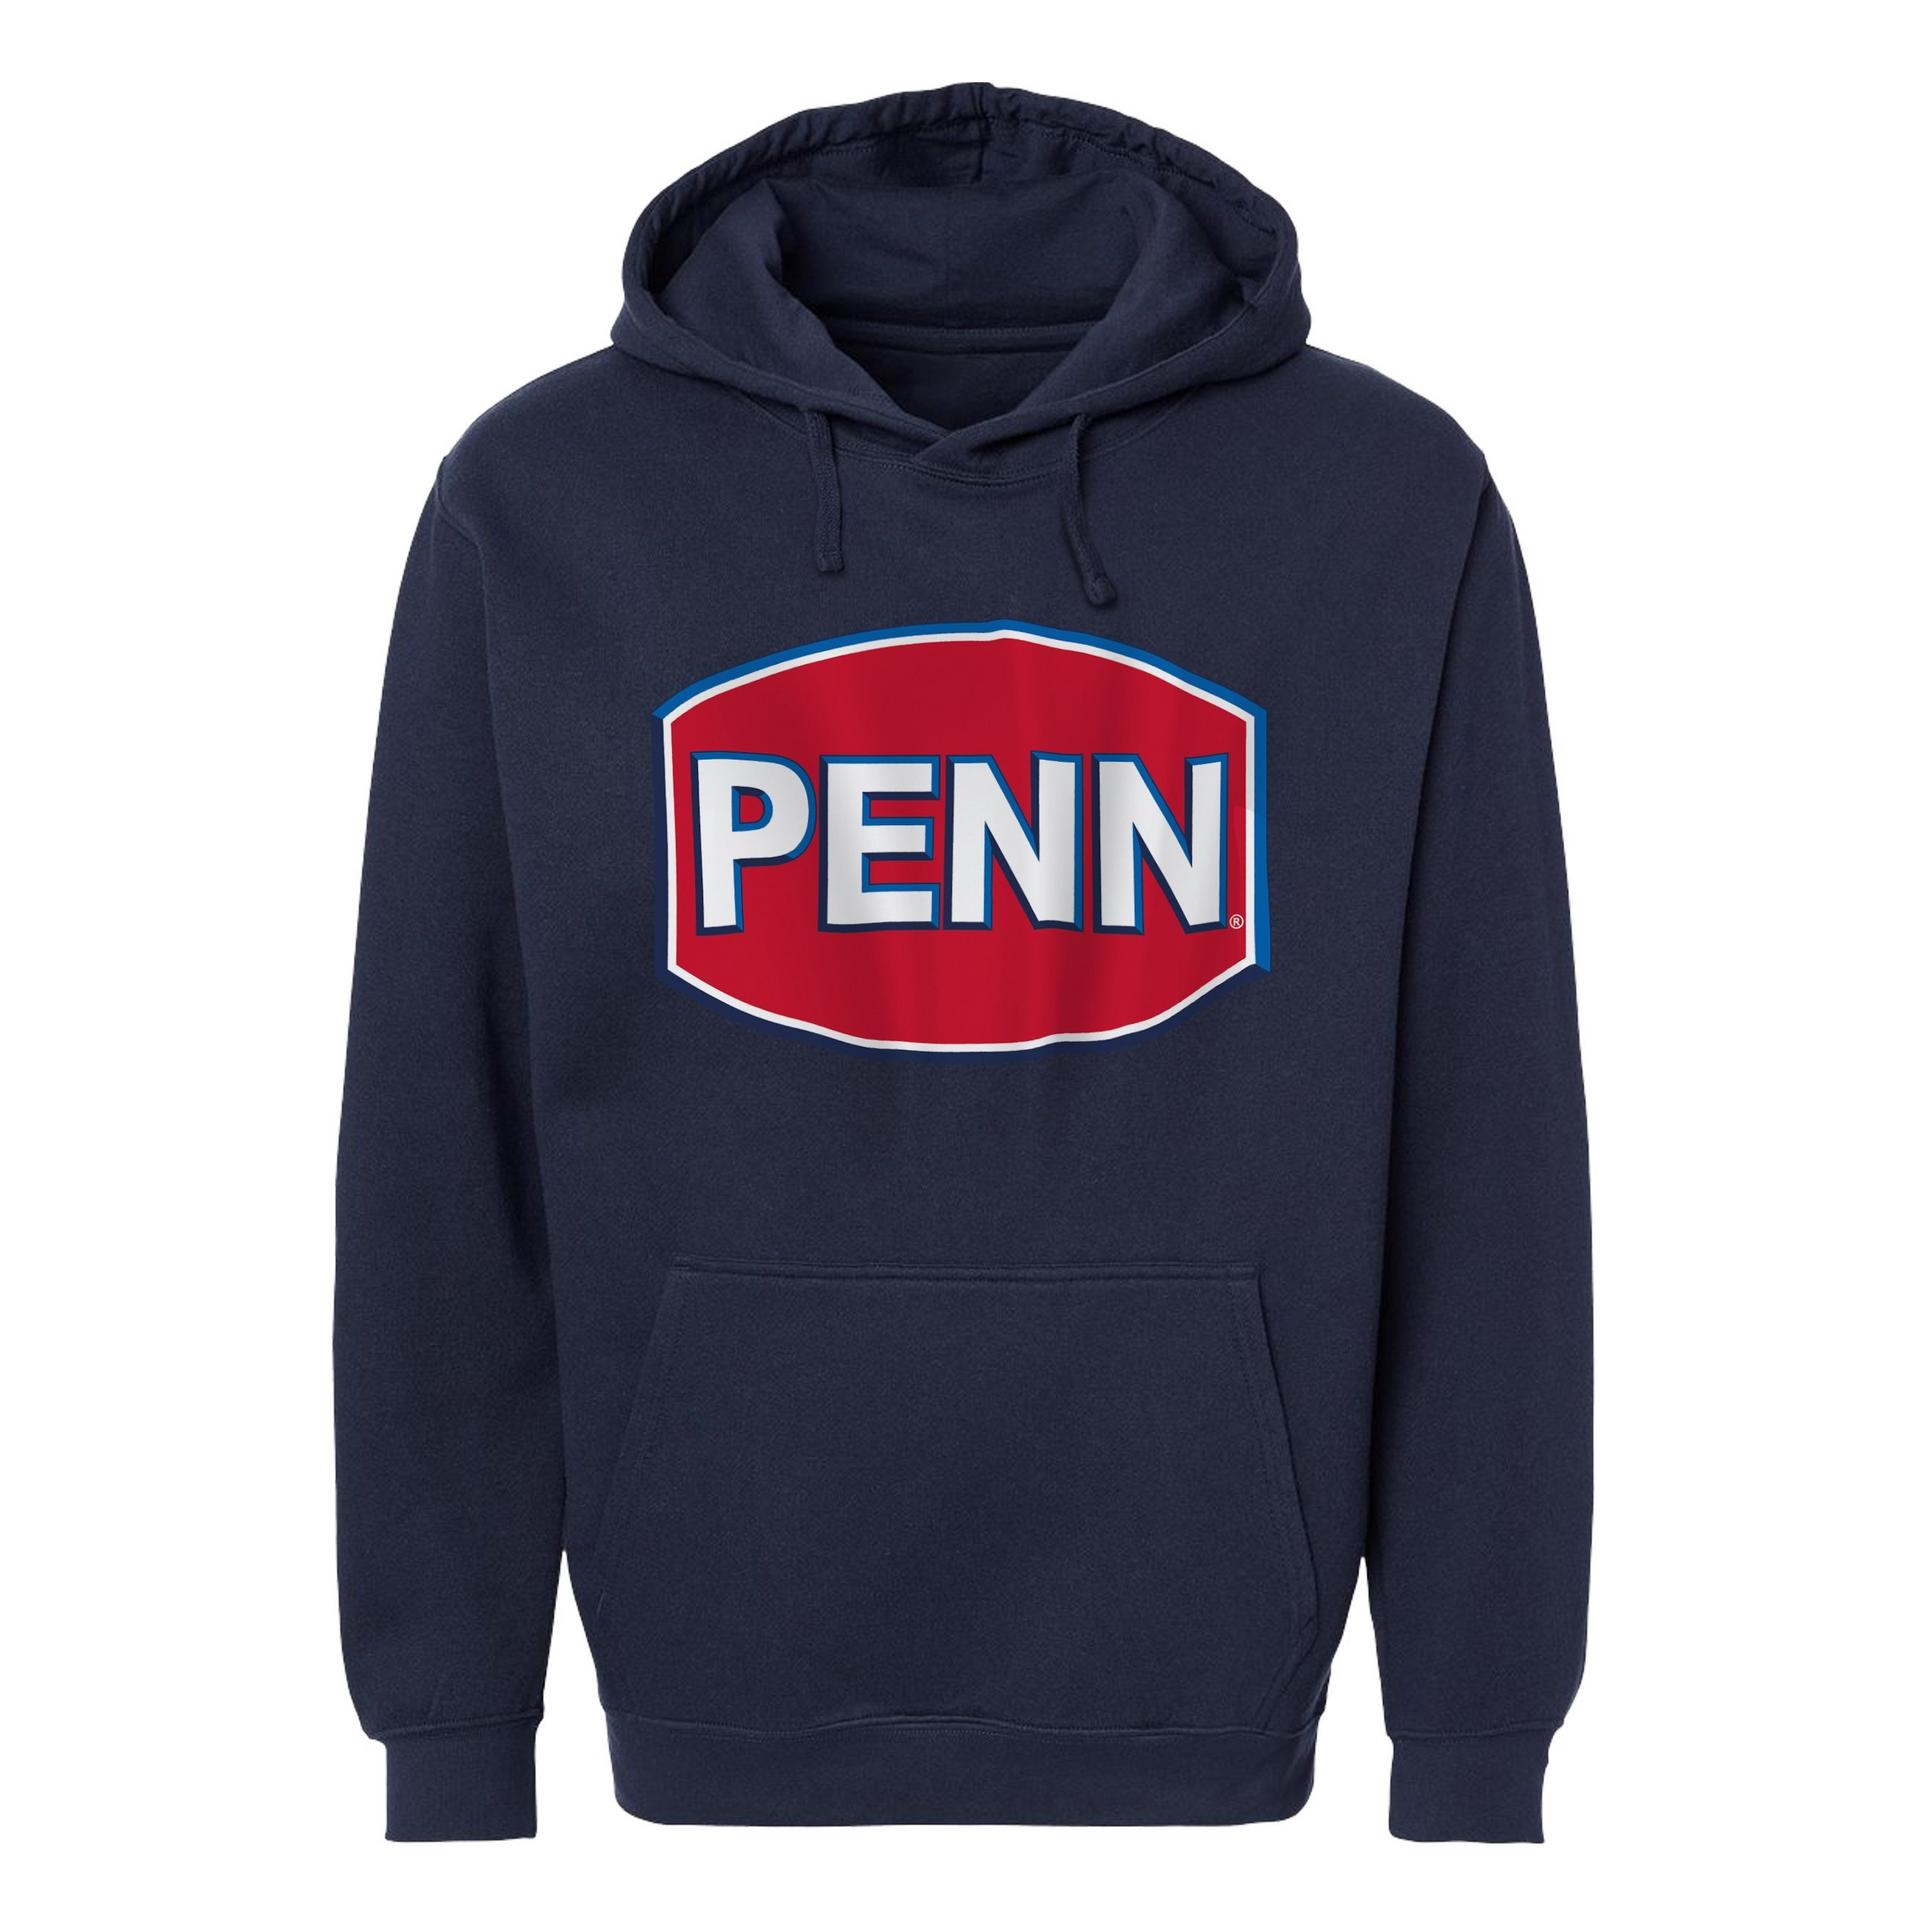 Penn Fishing T-Shirts for Men